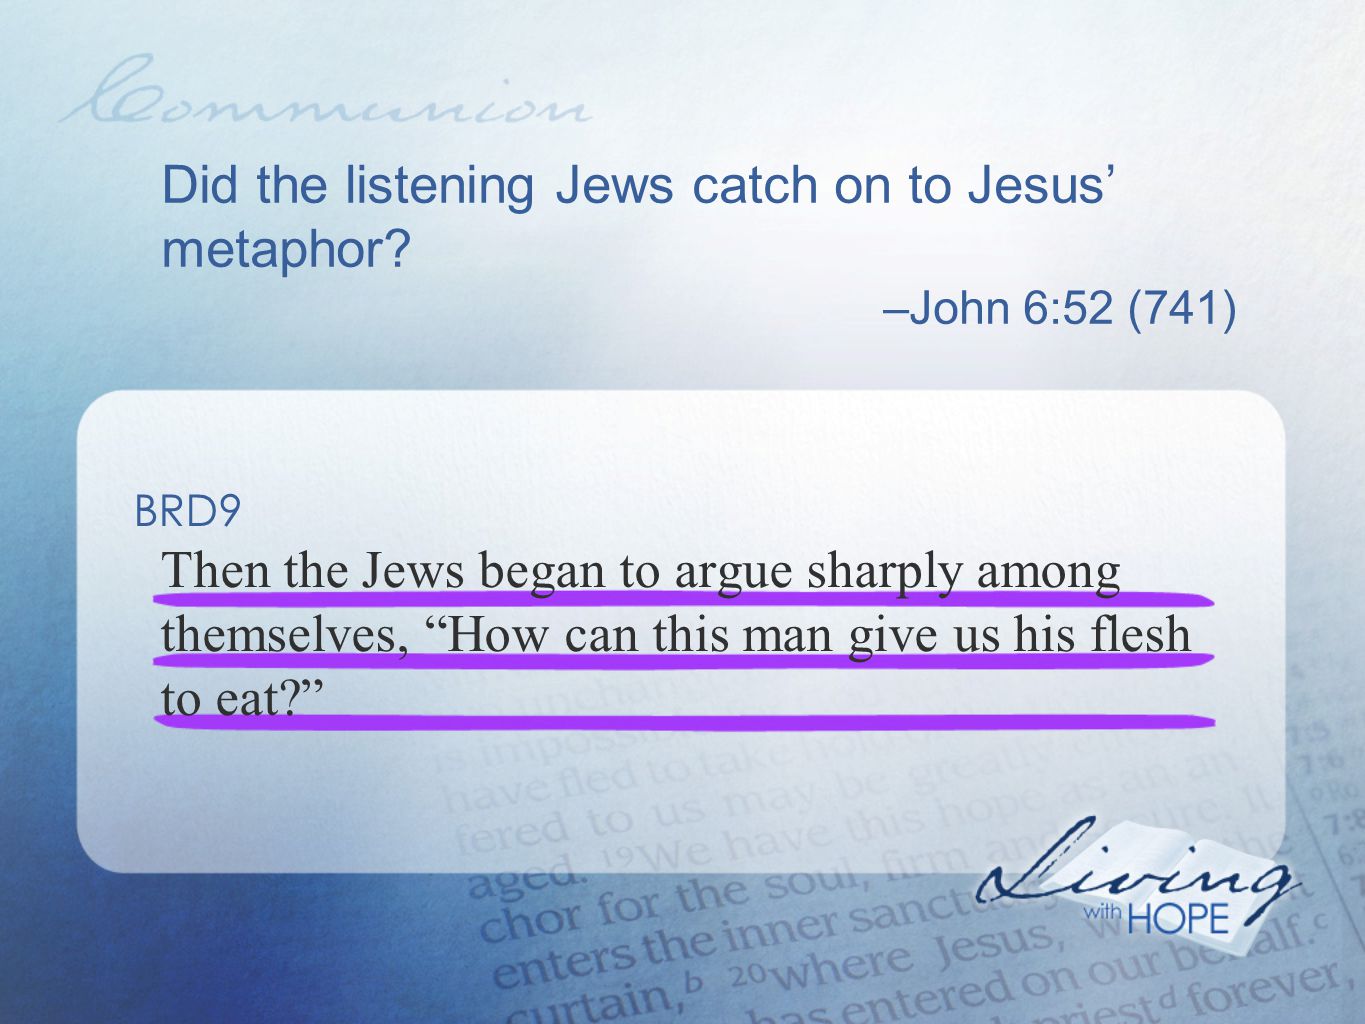 Did the listening Jews catch on to Jesus’ metaphor